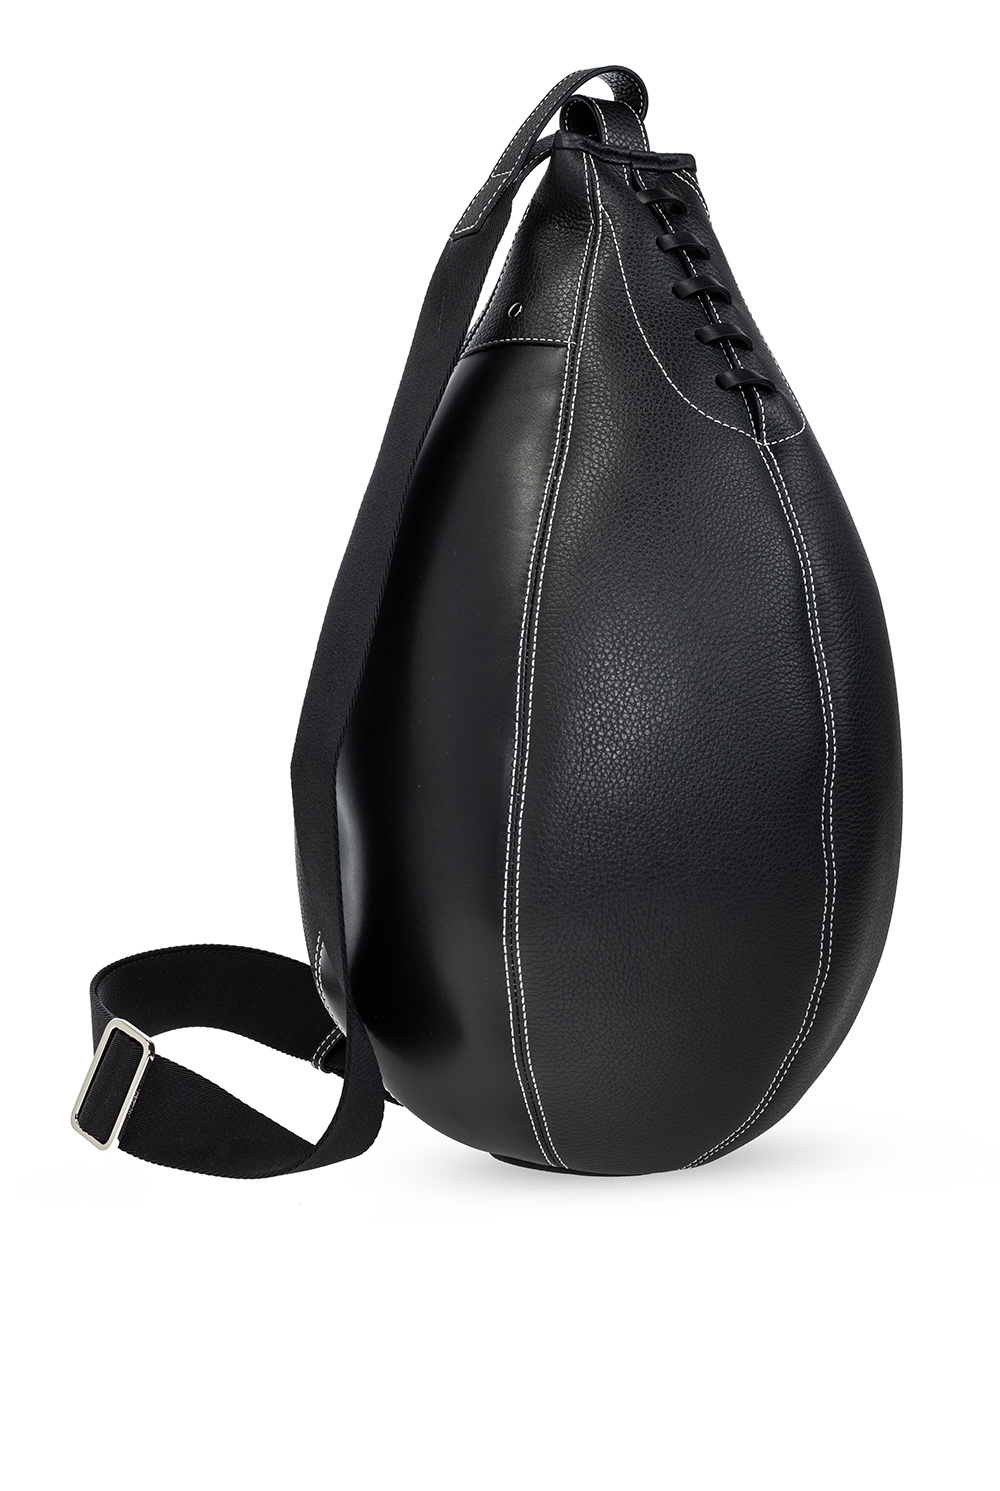 JW Anderson ‘Large Punch’ bag